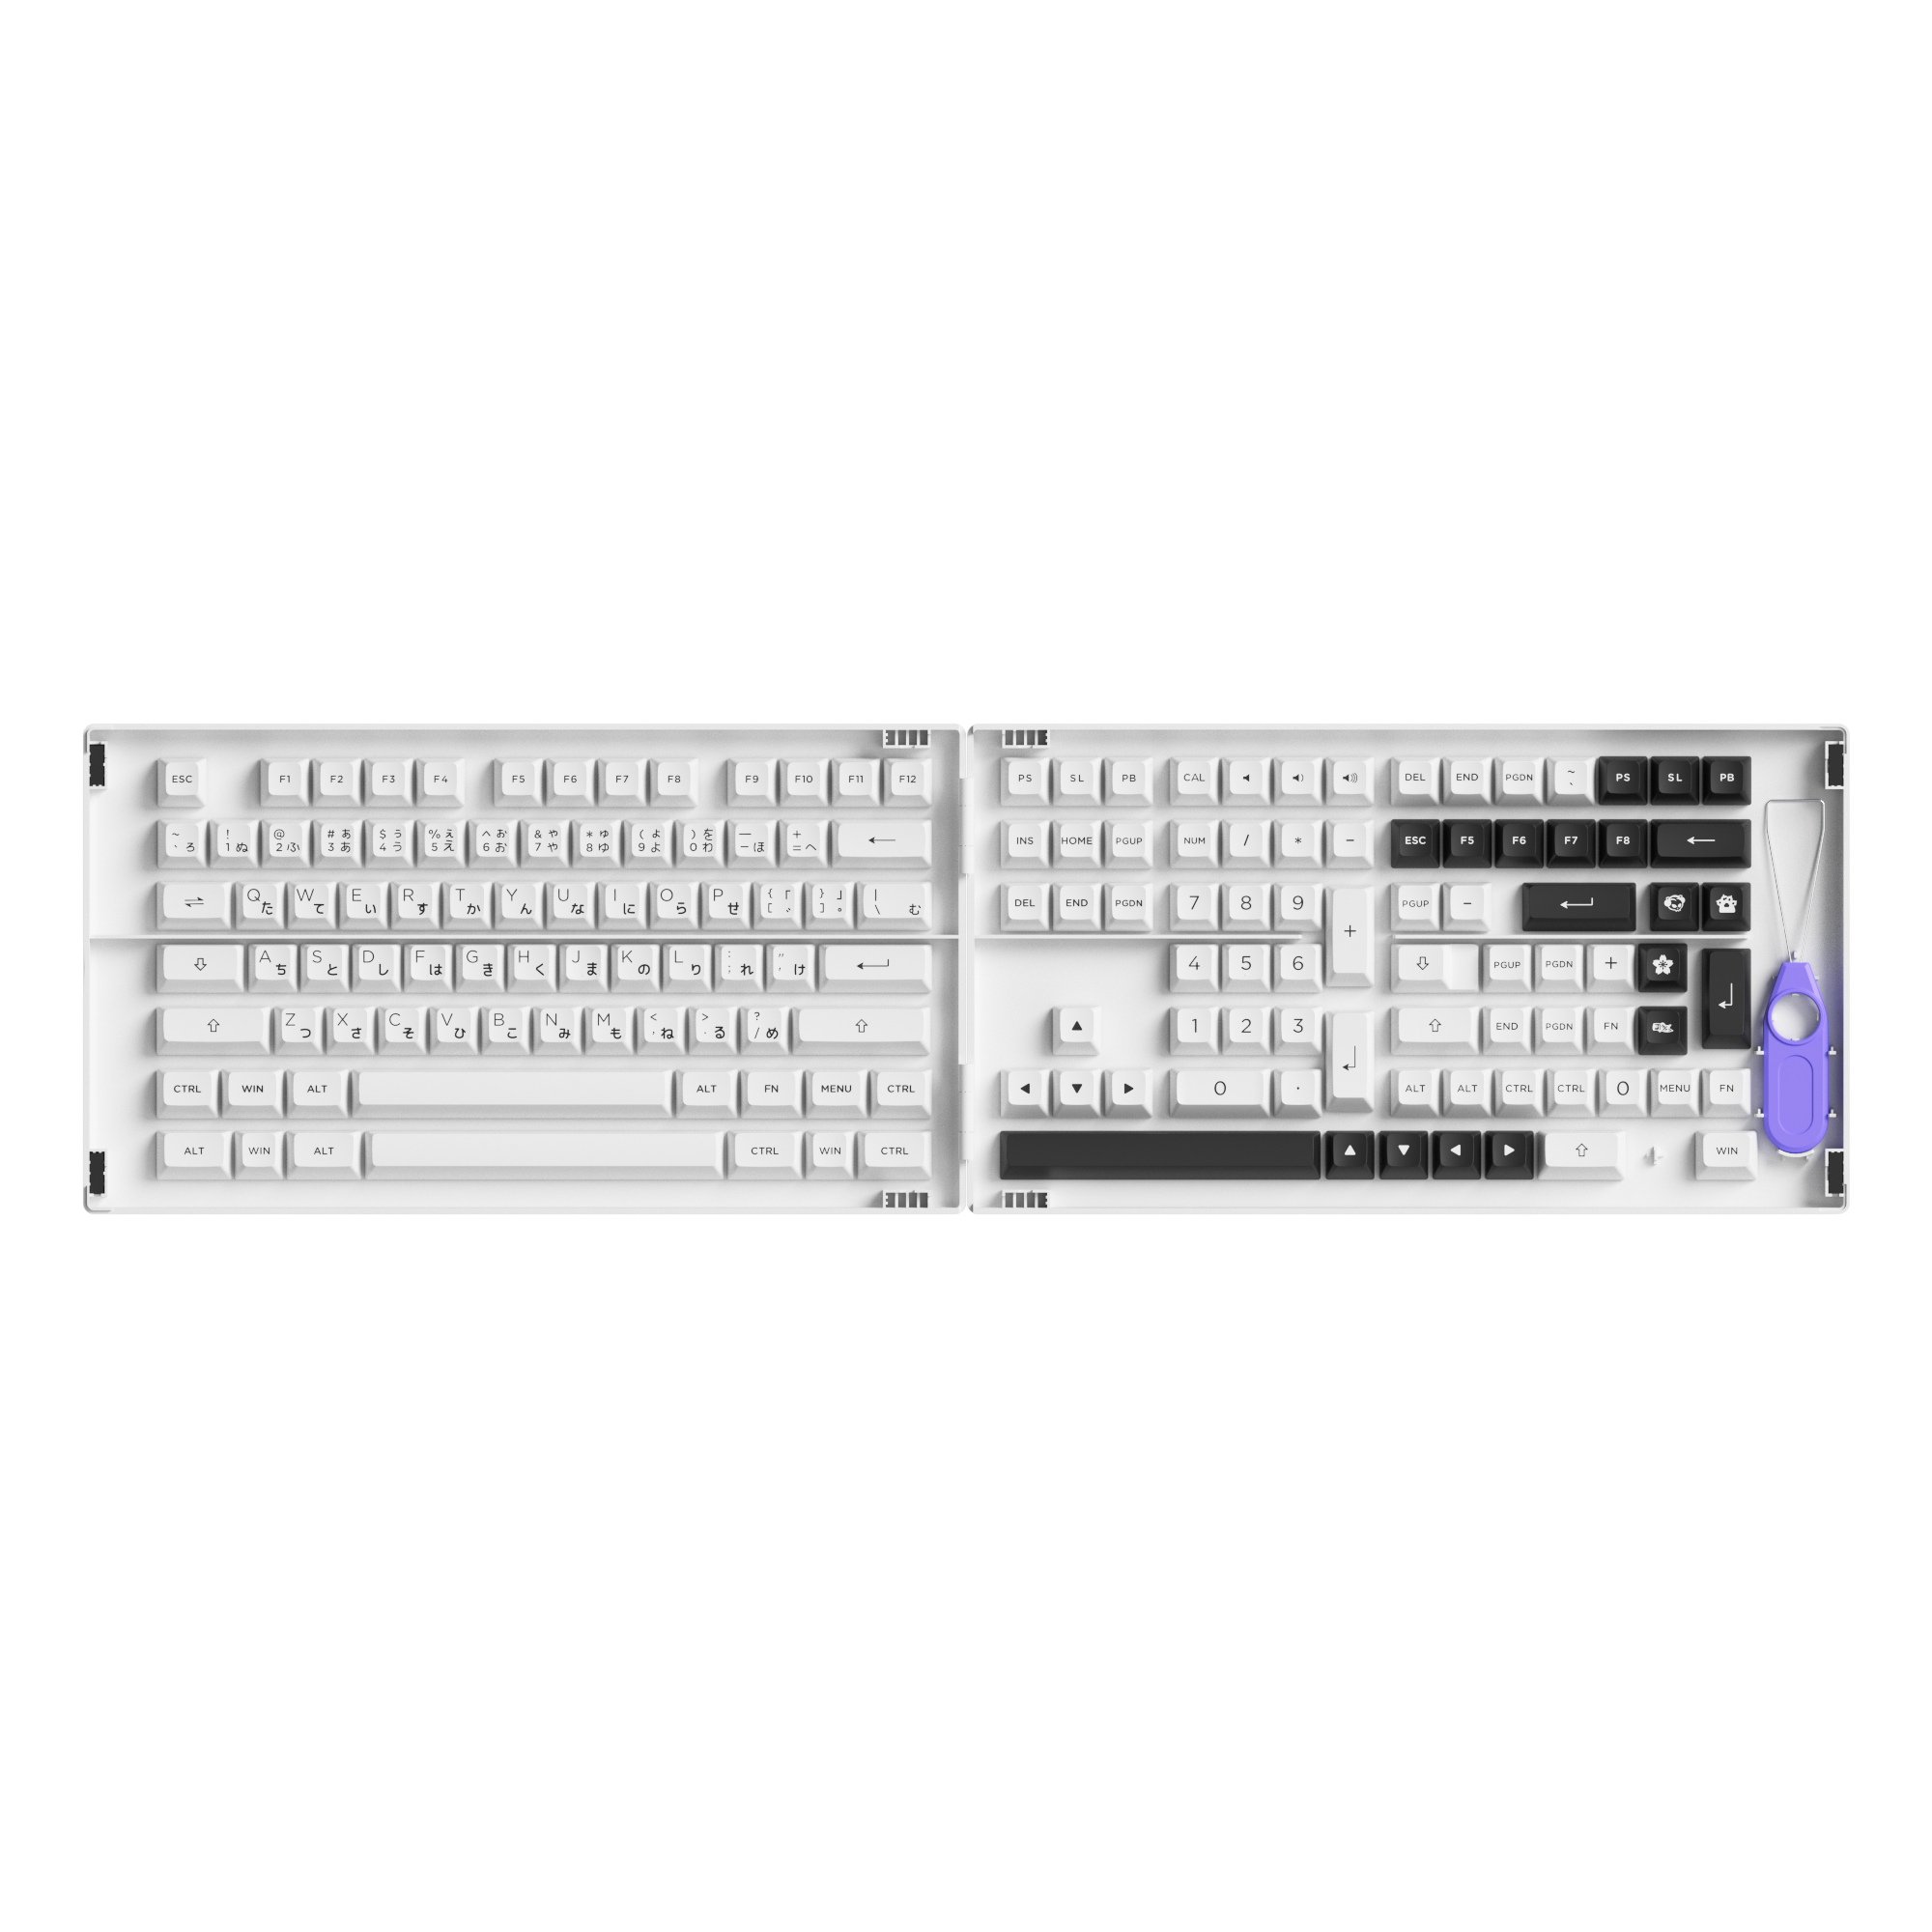 (Discontinued) ASA Black on White Keycap Set (158 keys)